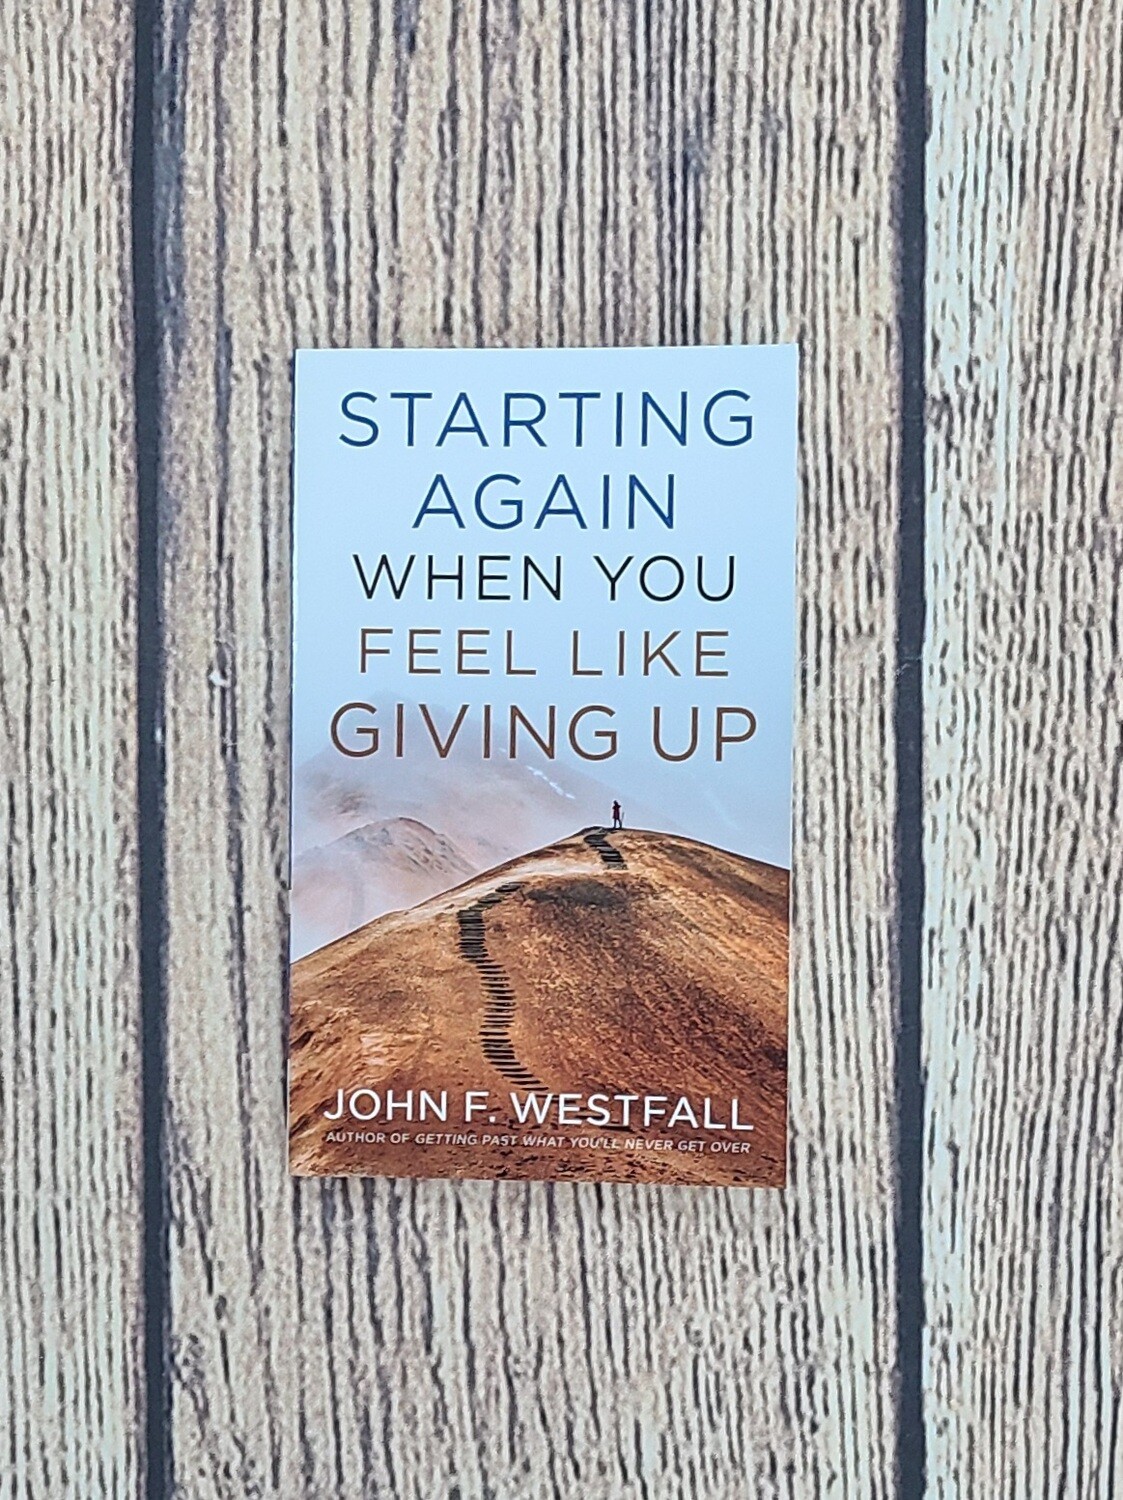 Starting Again When You Feel Like Giving Up by John F. Westfall